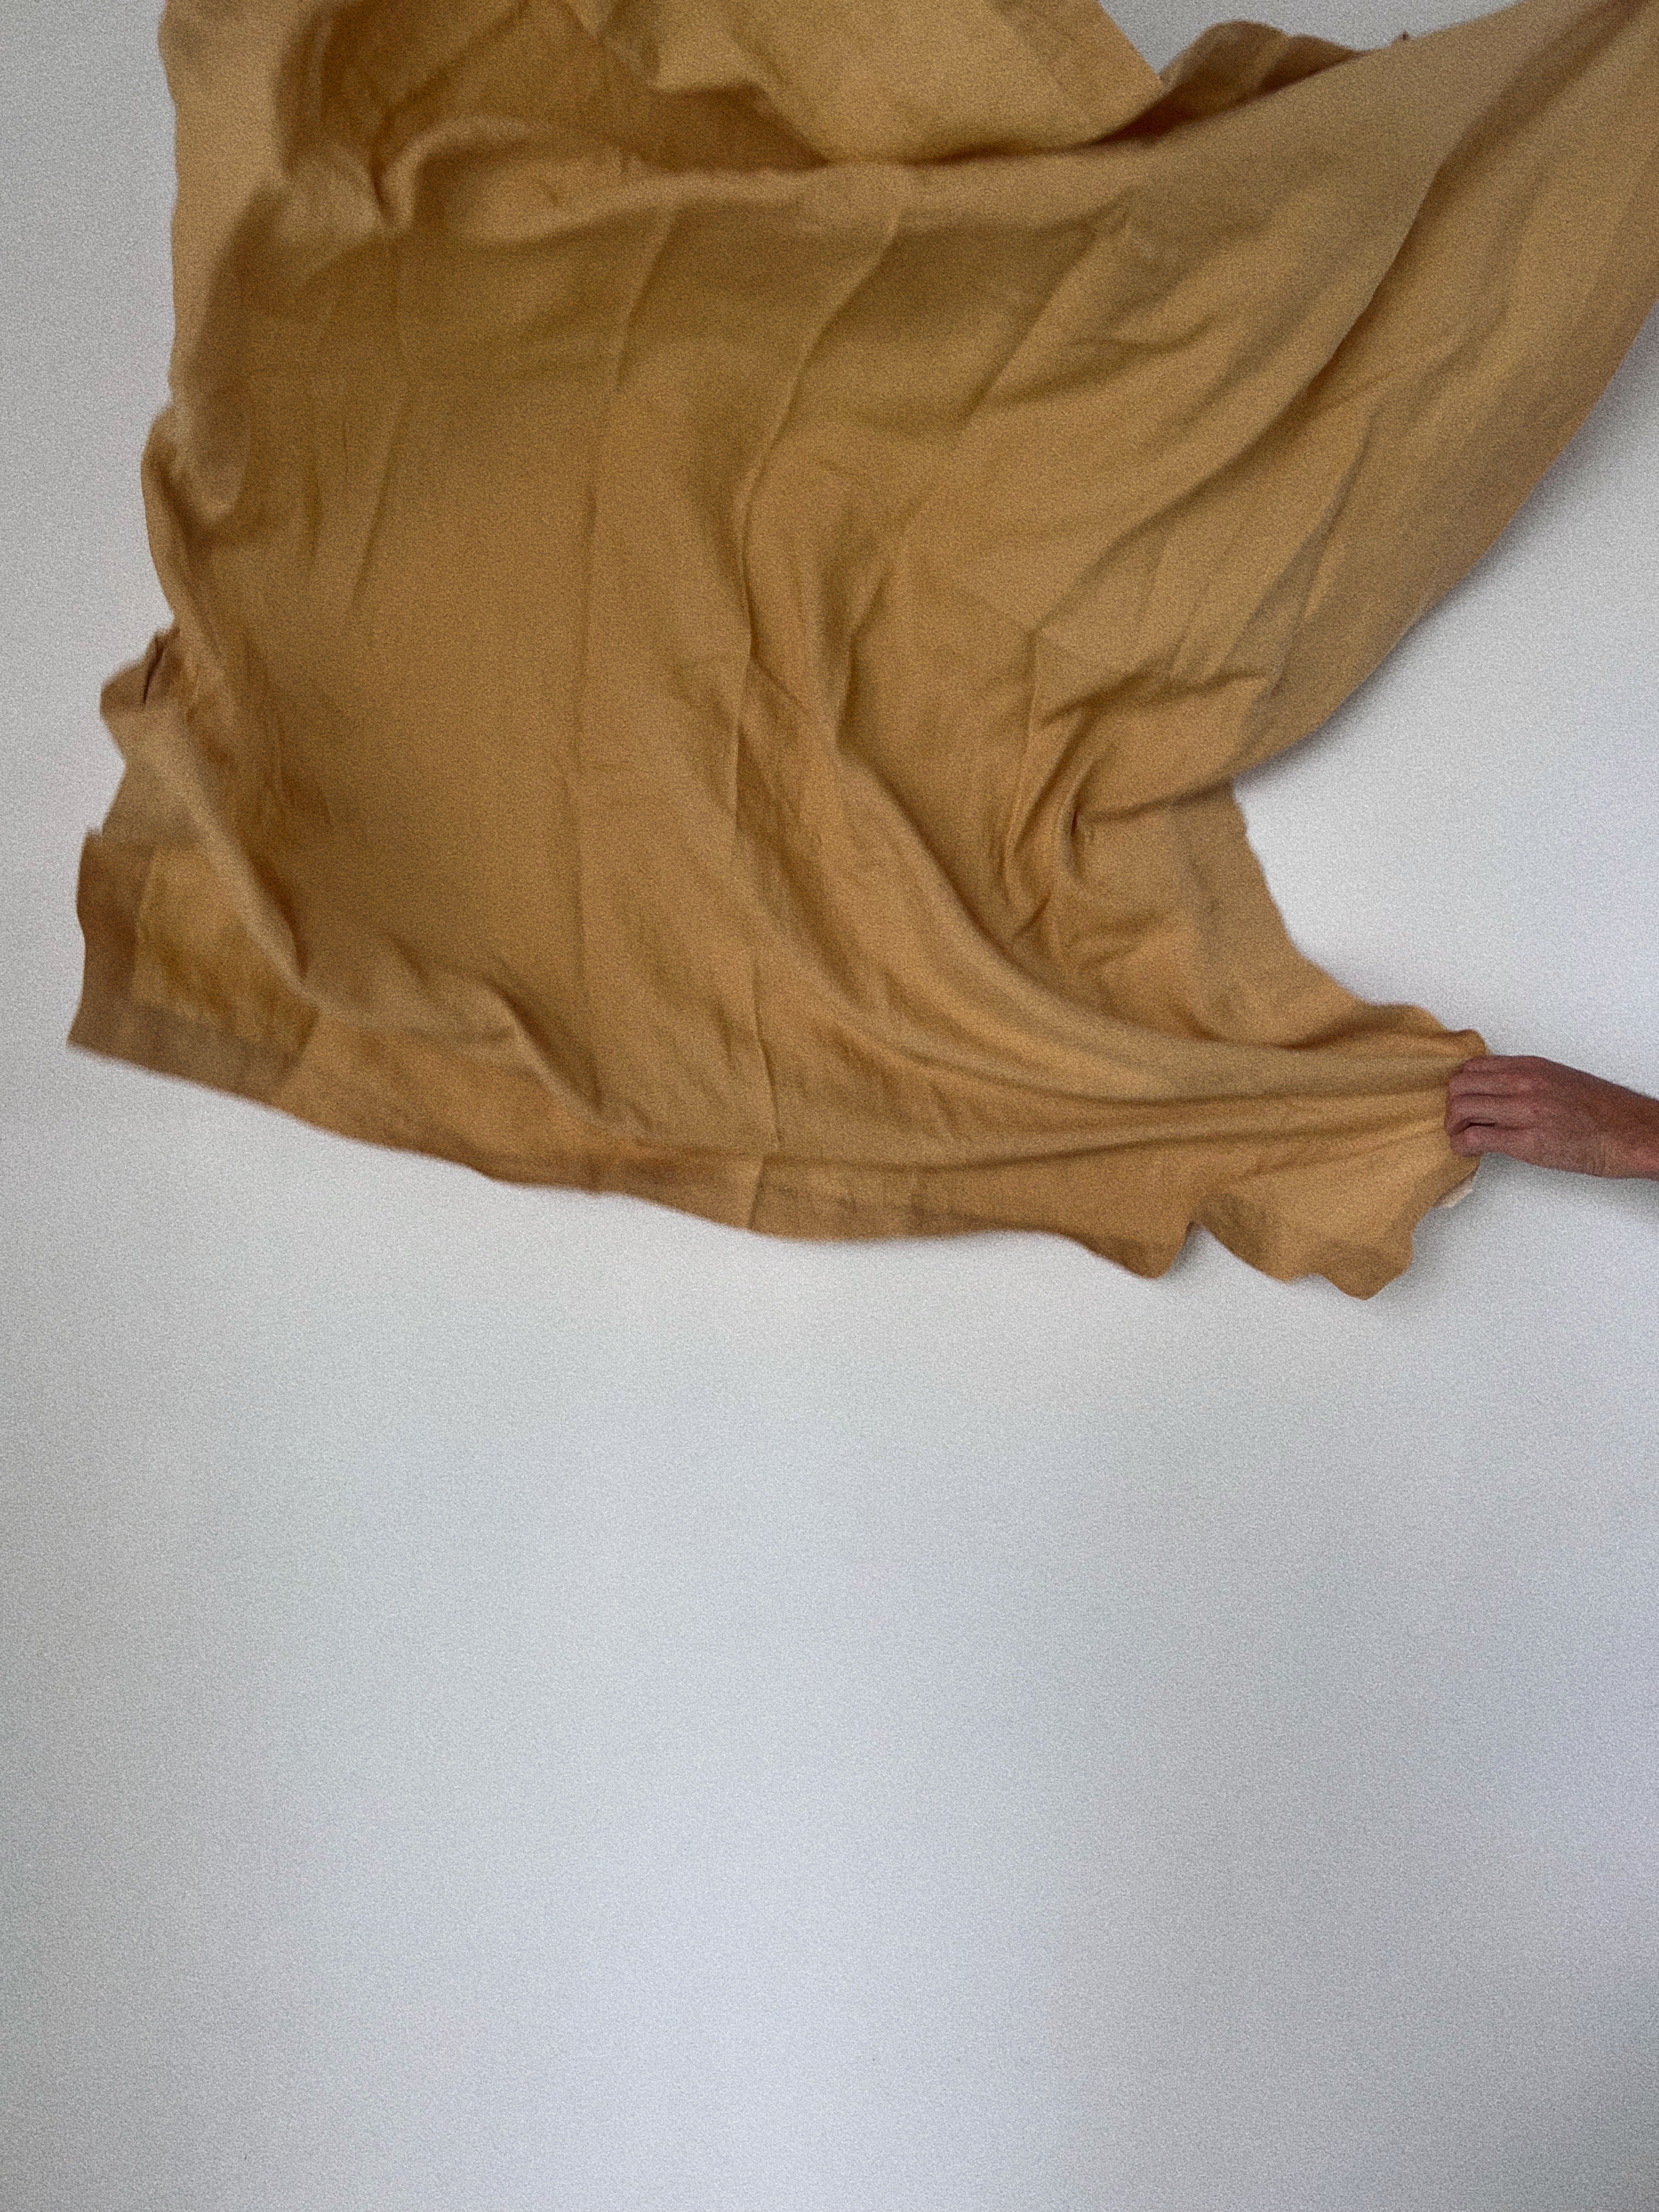 throw . mustard linen